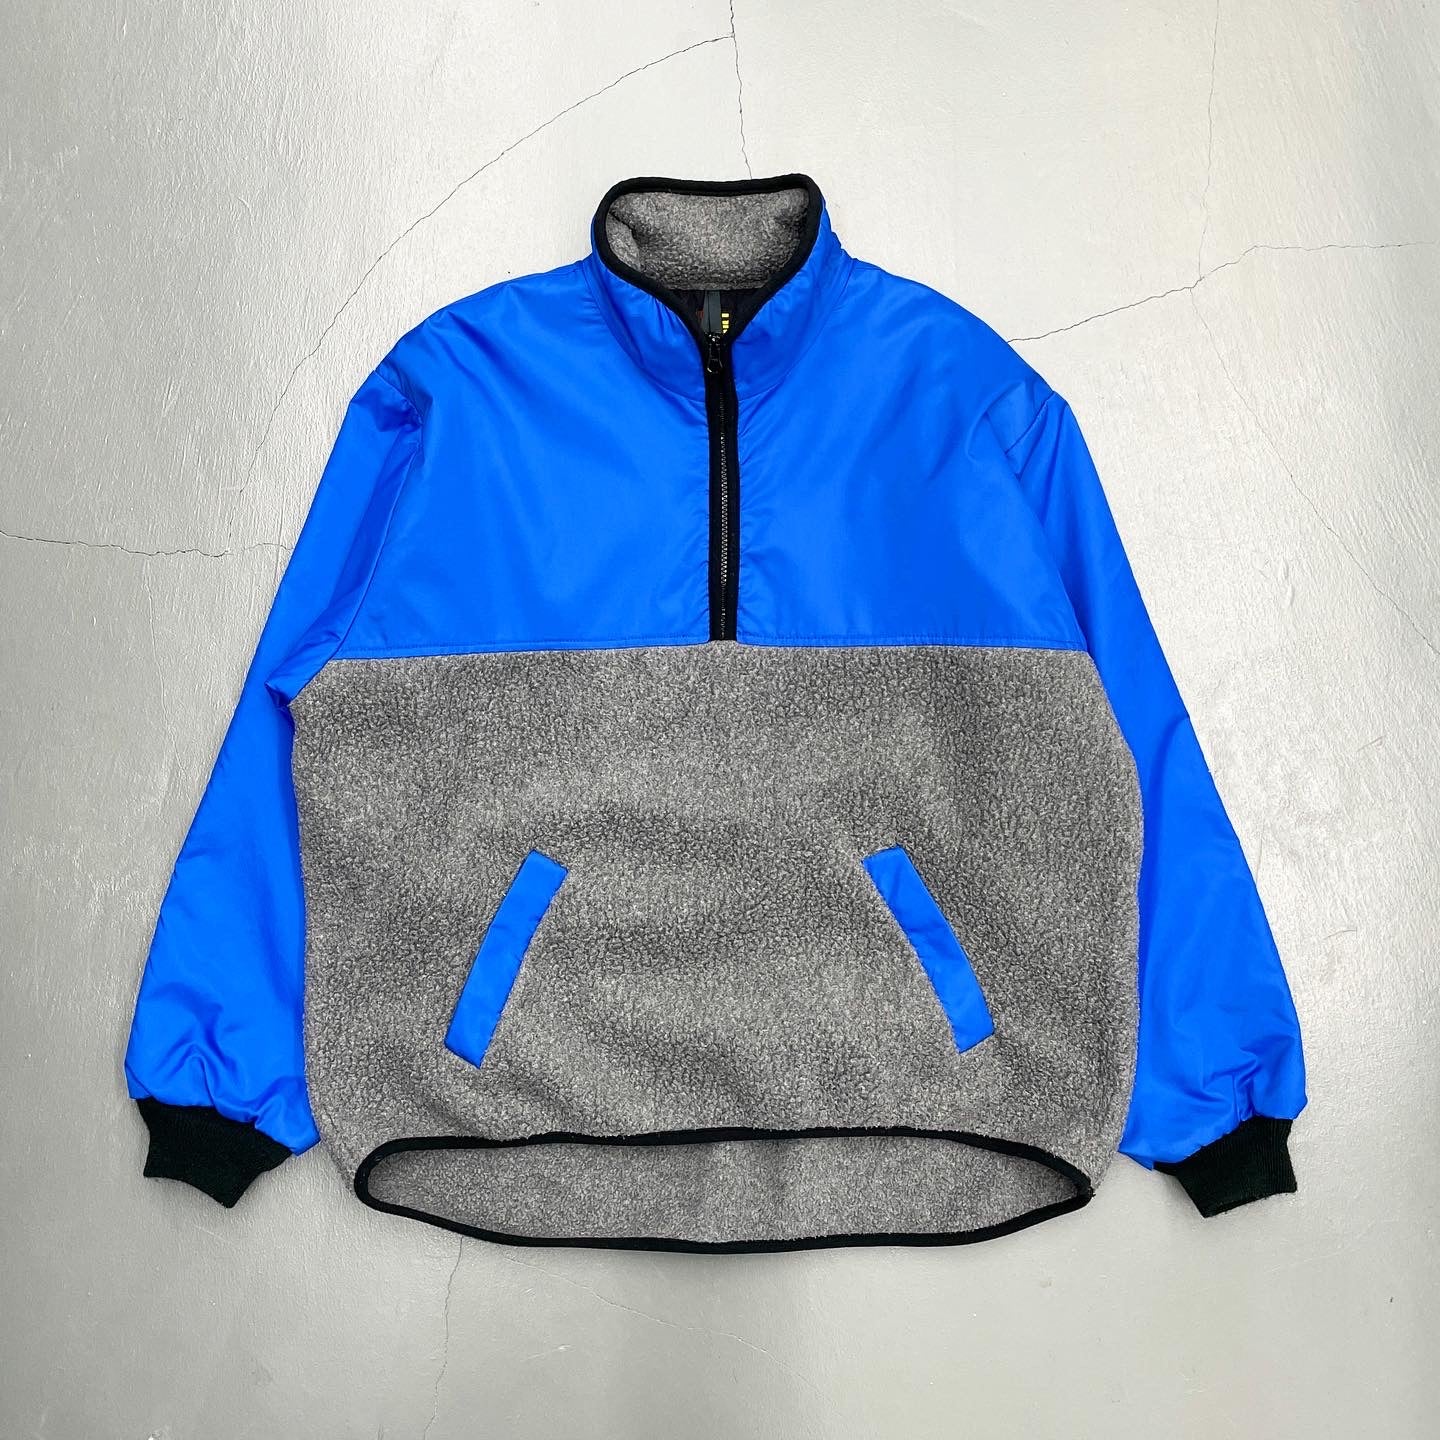 J.Crew SPORT Nylon/Fleece 2toned Pullover Jacket